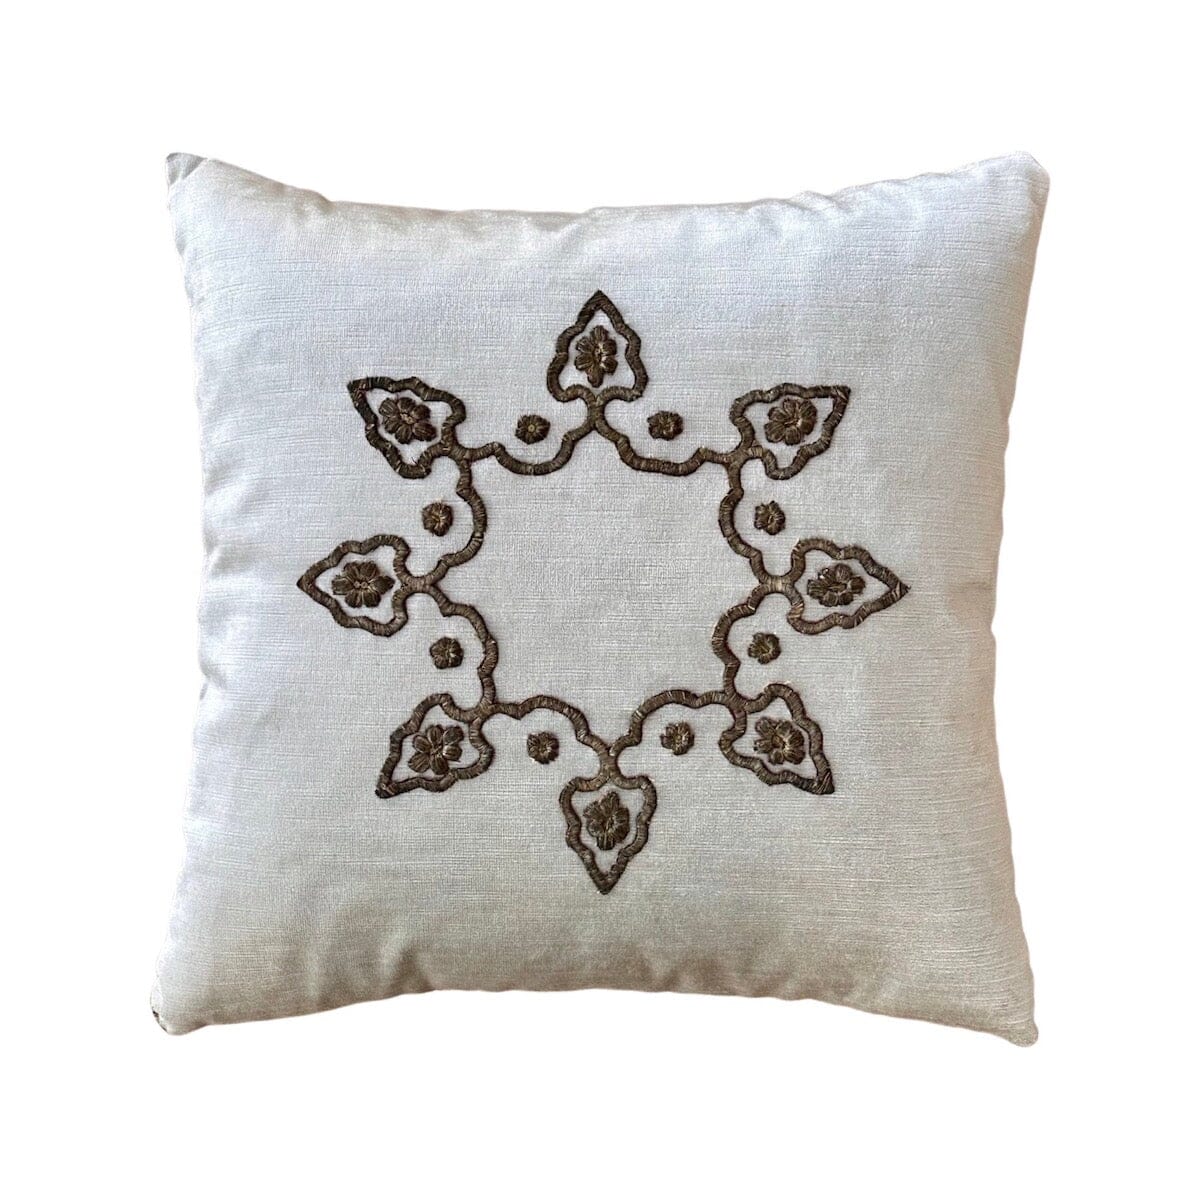 Antique Ottoman Empire Raised Gold Metallic Embroidery (#E110922 | 17 1/2 x 17 1/2) Pillows B. Viz Design 